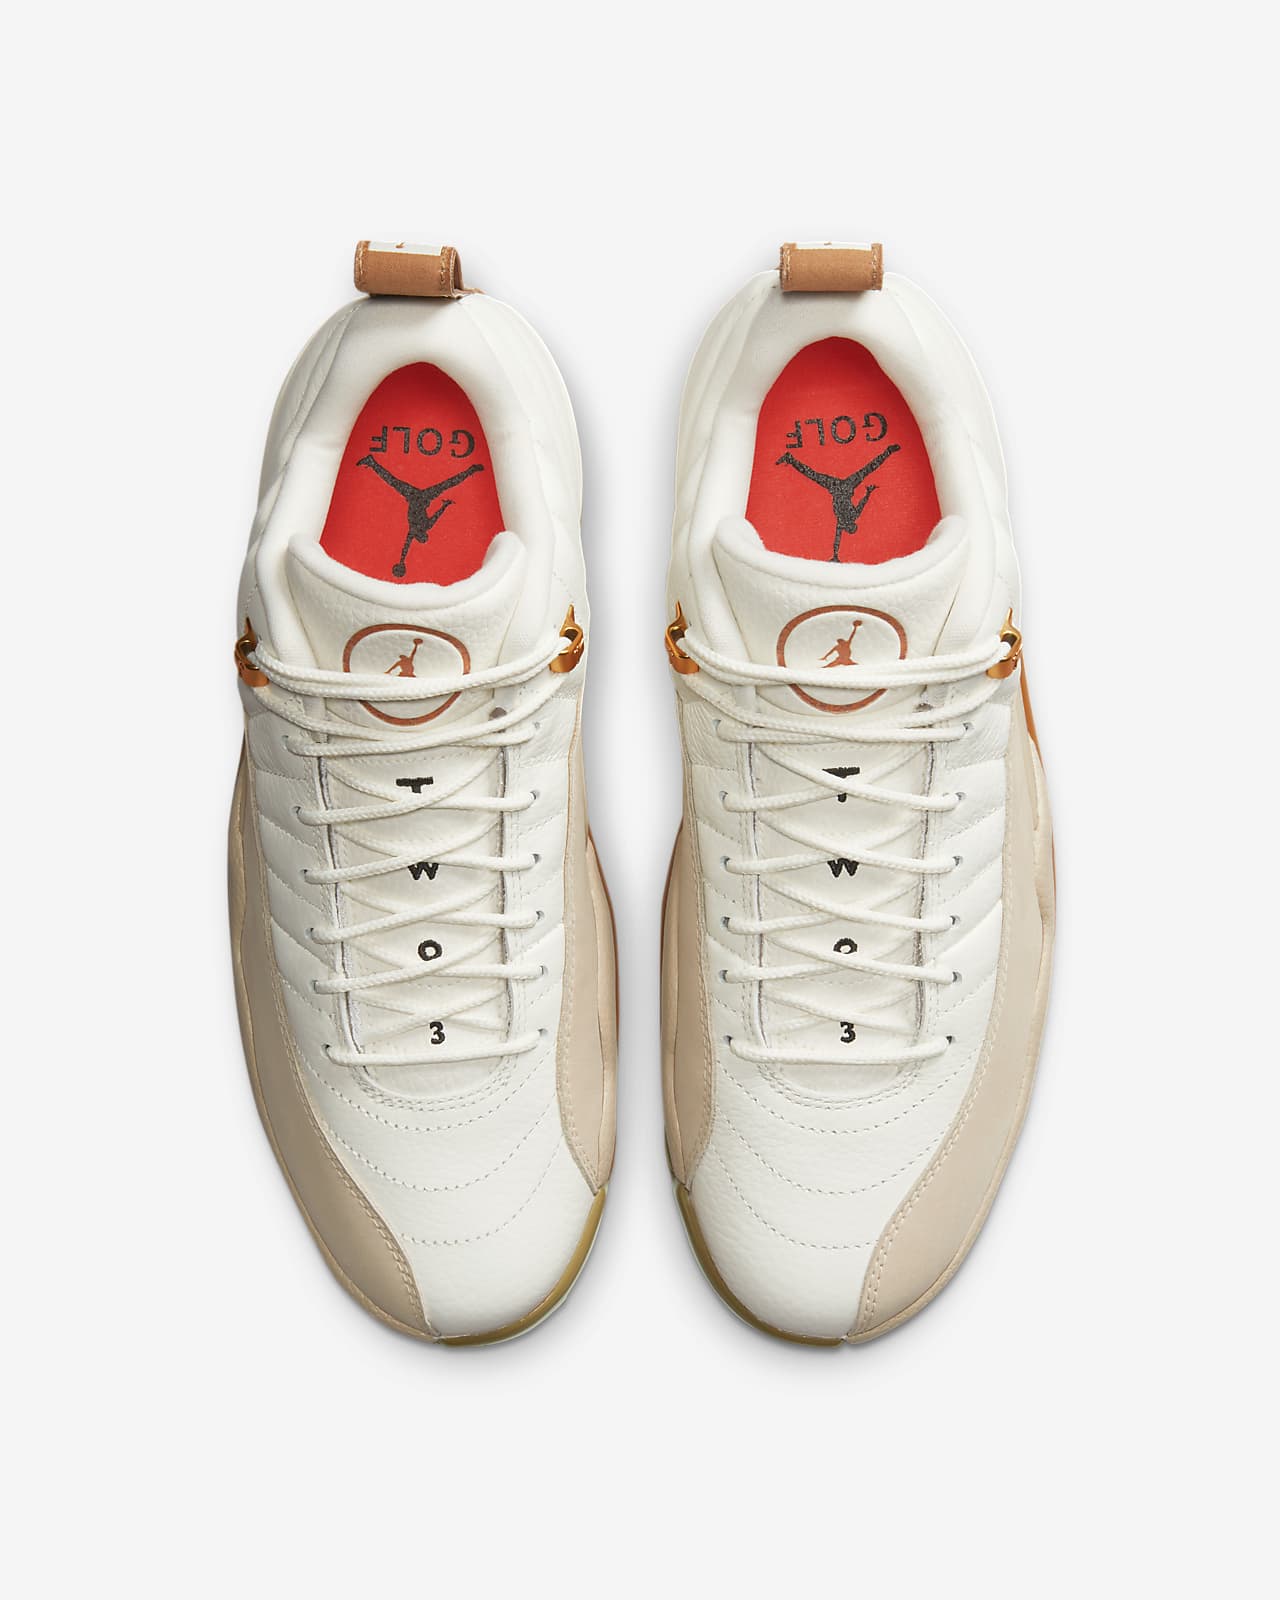 Jordan XII G men's nike air jordan xii shoes Golf Shoes. Nike LU